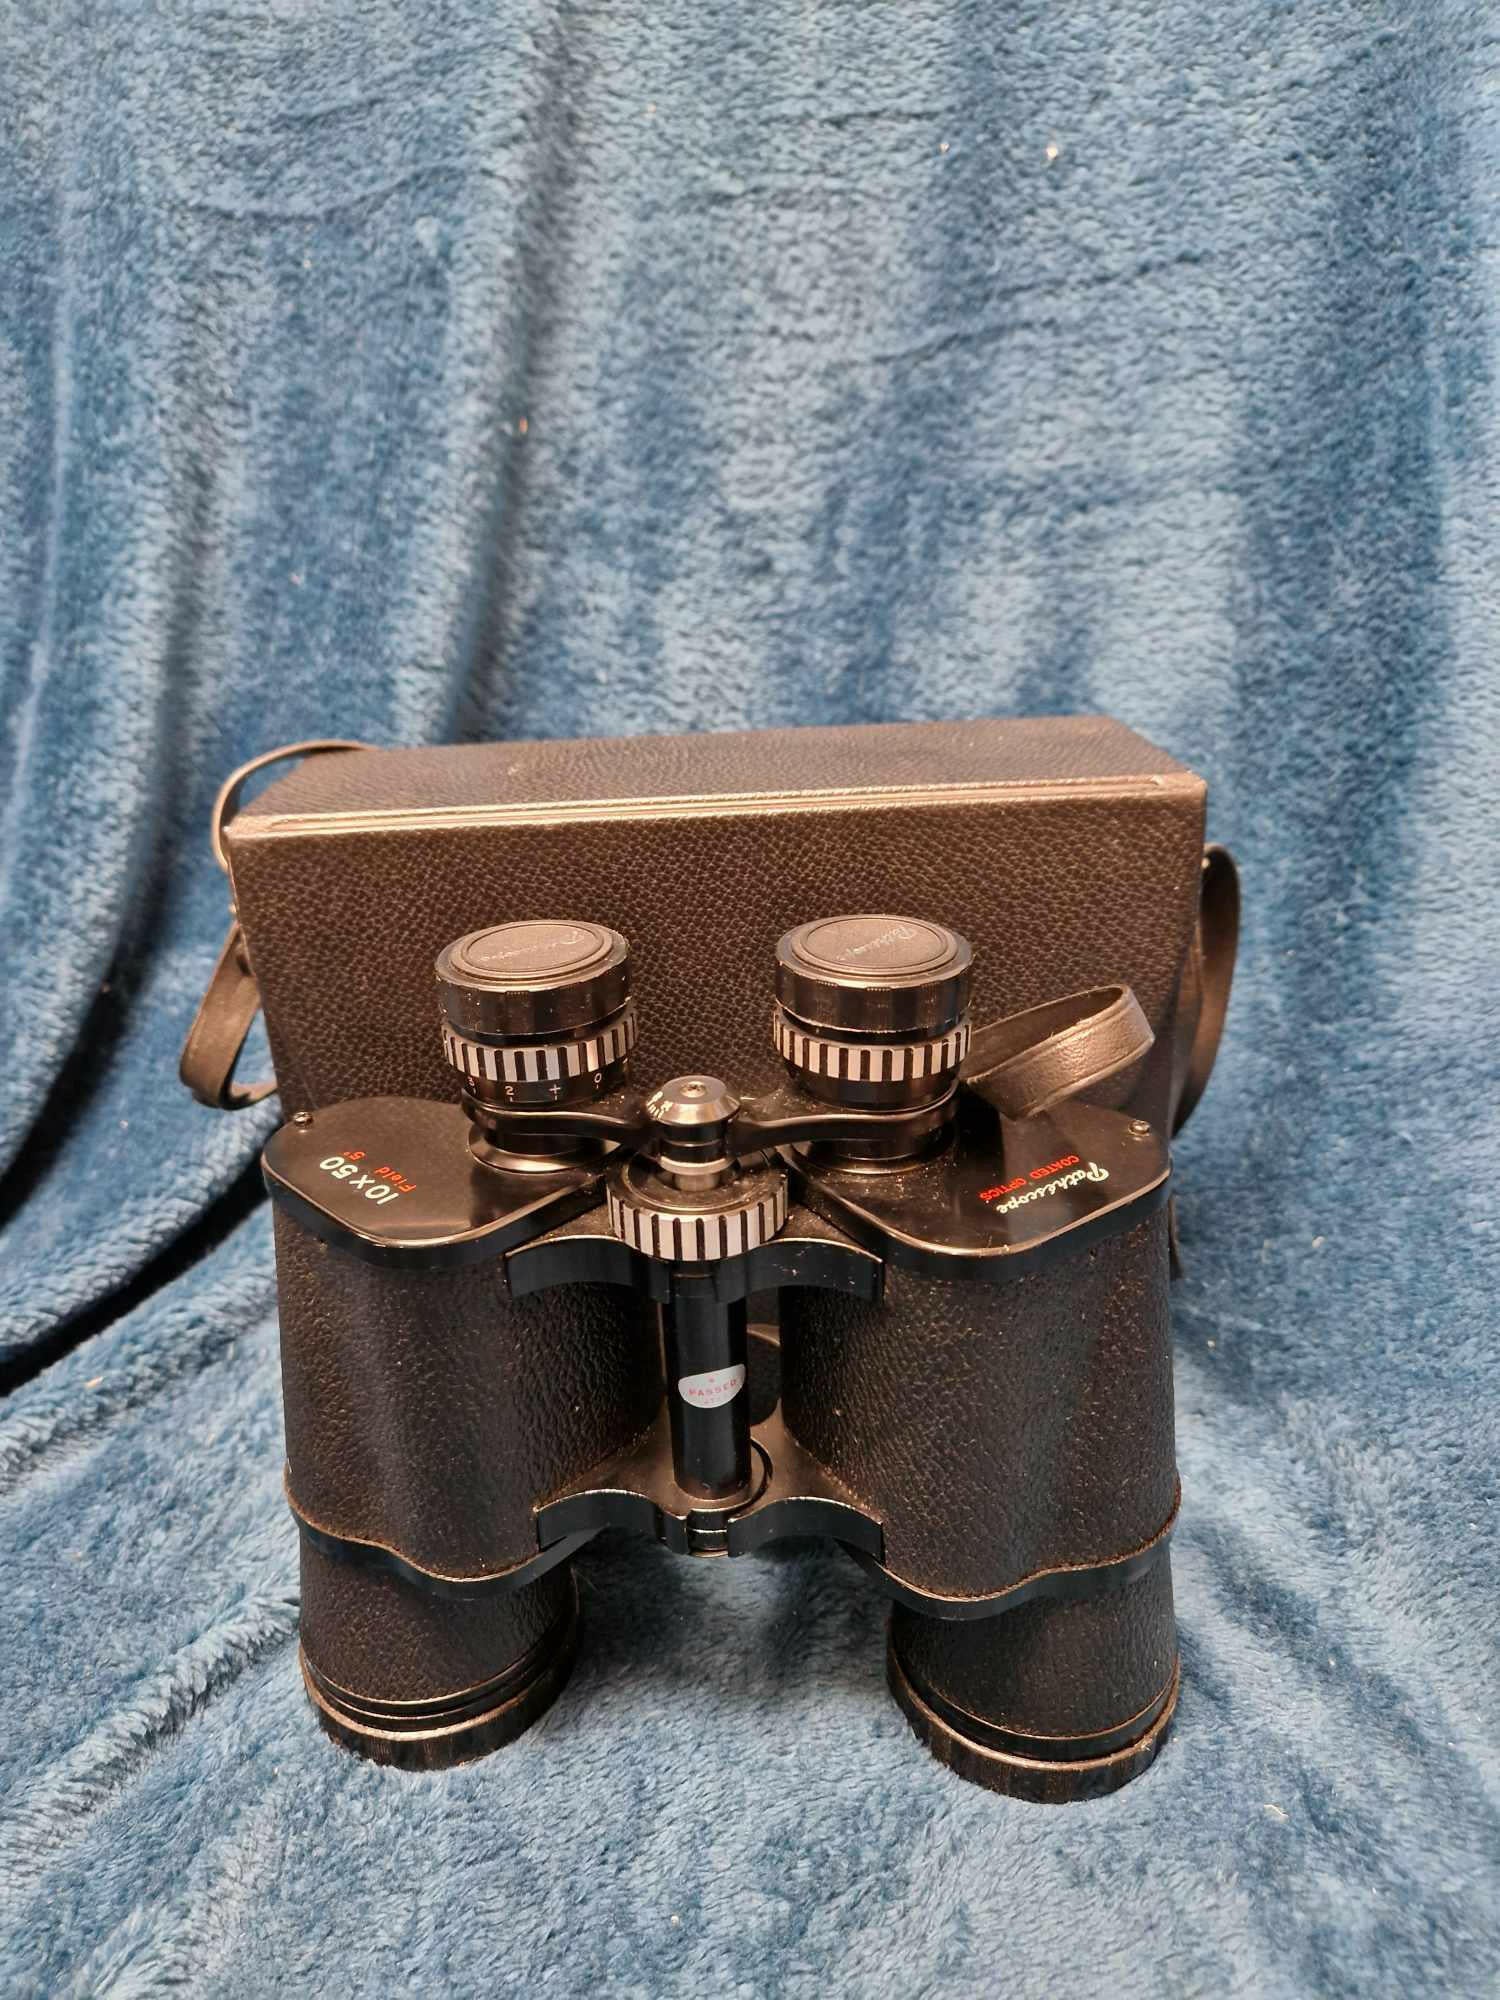 Pathescope 10 x 50 Binoculars